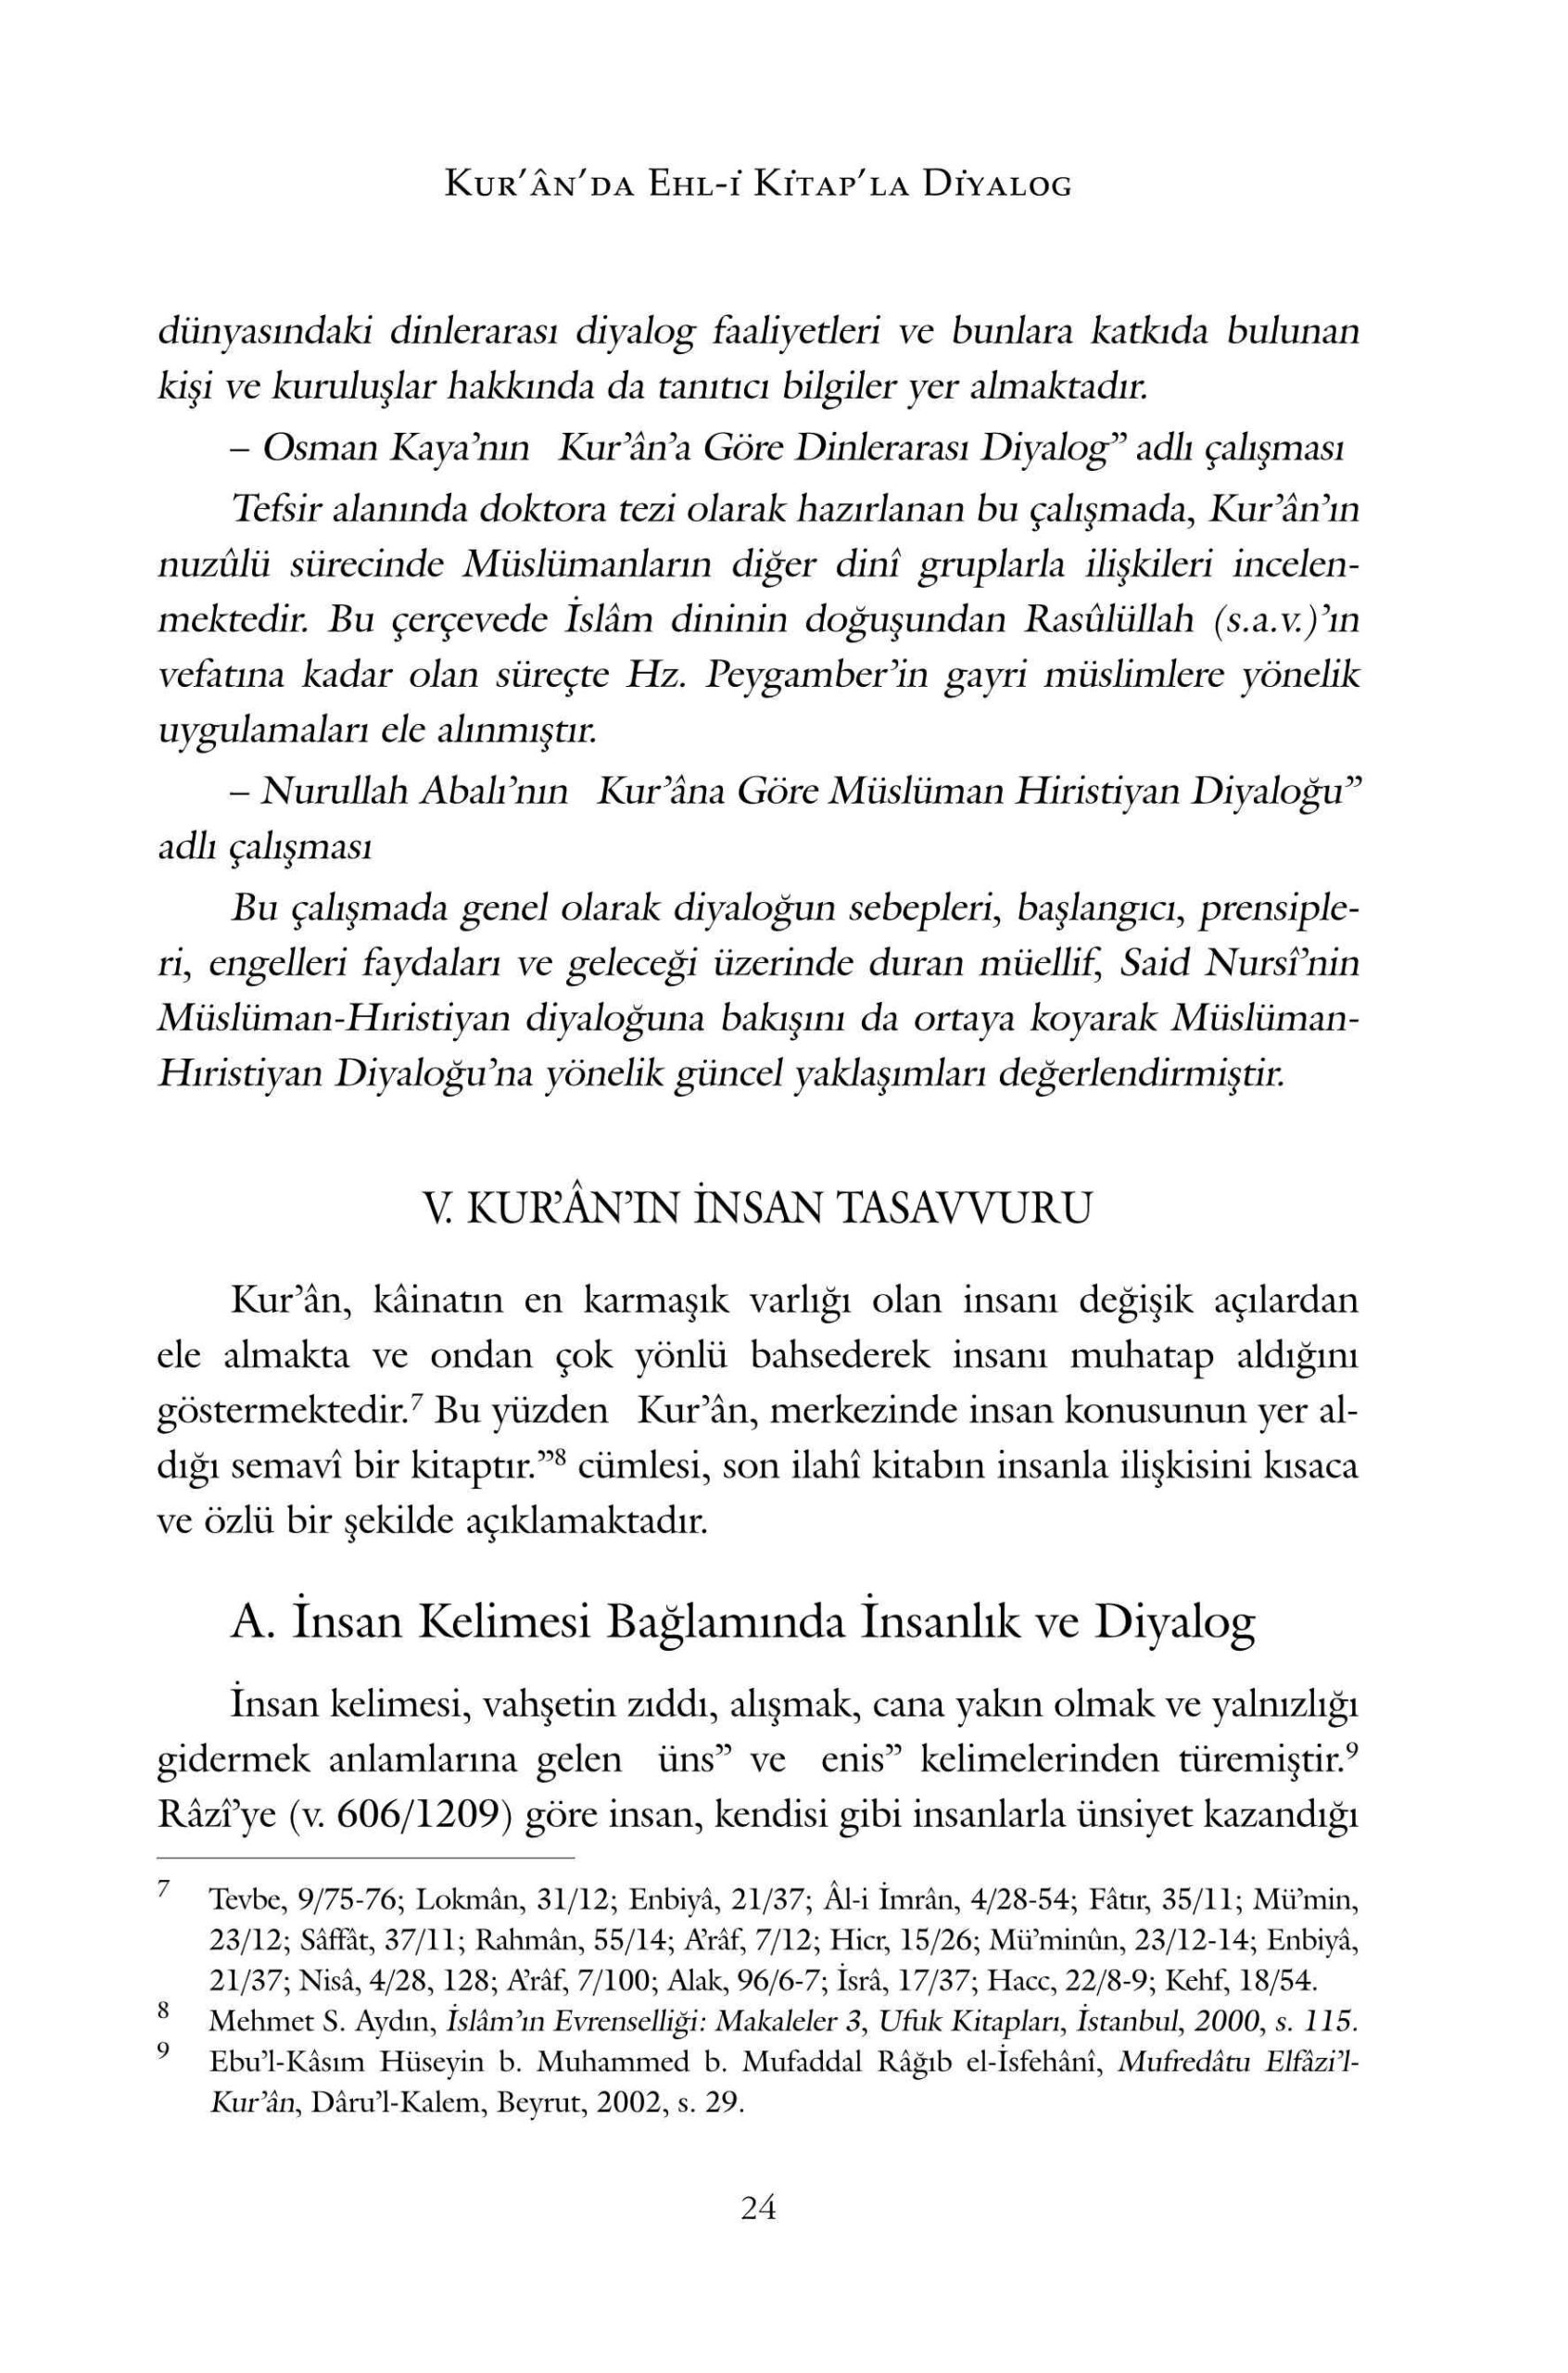 Ali Can - Kuranda Ehli Kitapla Muhabbet - IsikAkademiY.pdf, 481-Sayfa 